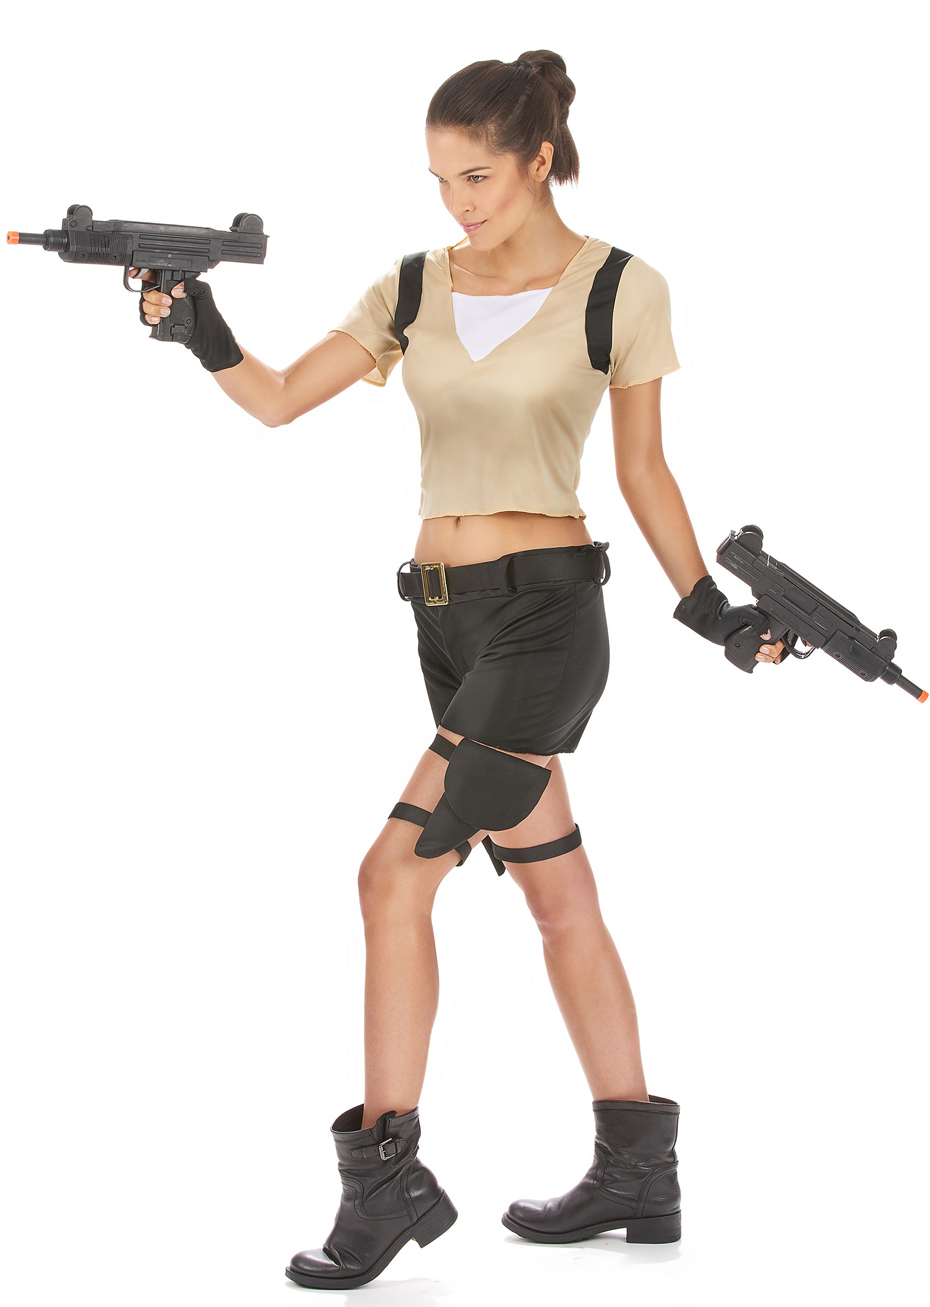 Déguisement Lara Croft femme